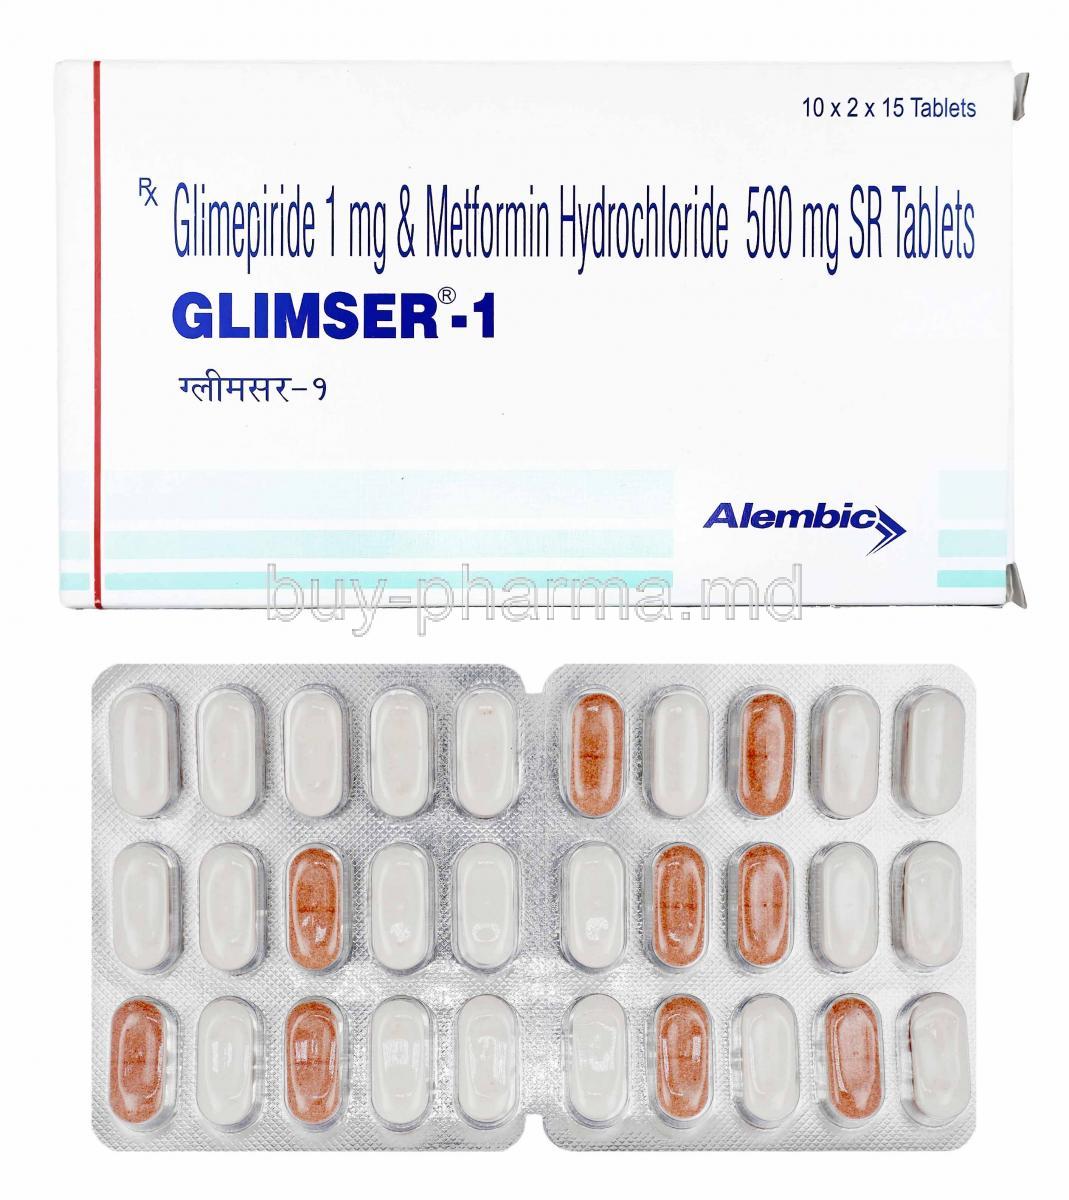 Glimser, Glimepiride and Metformin1mg box and tablets